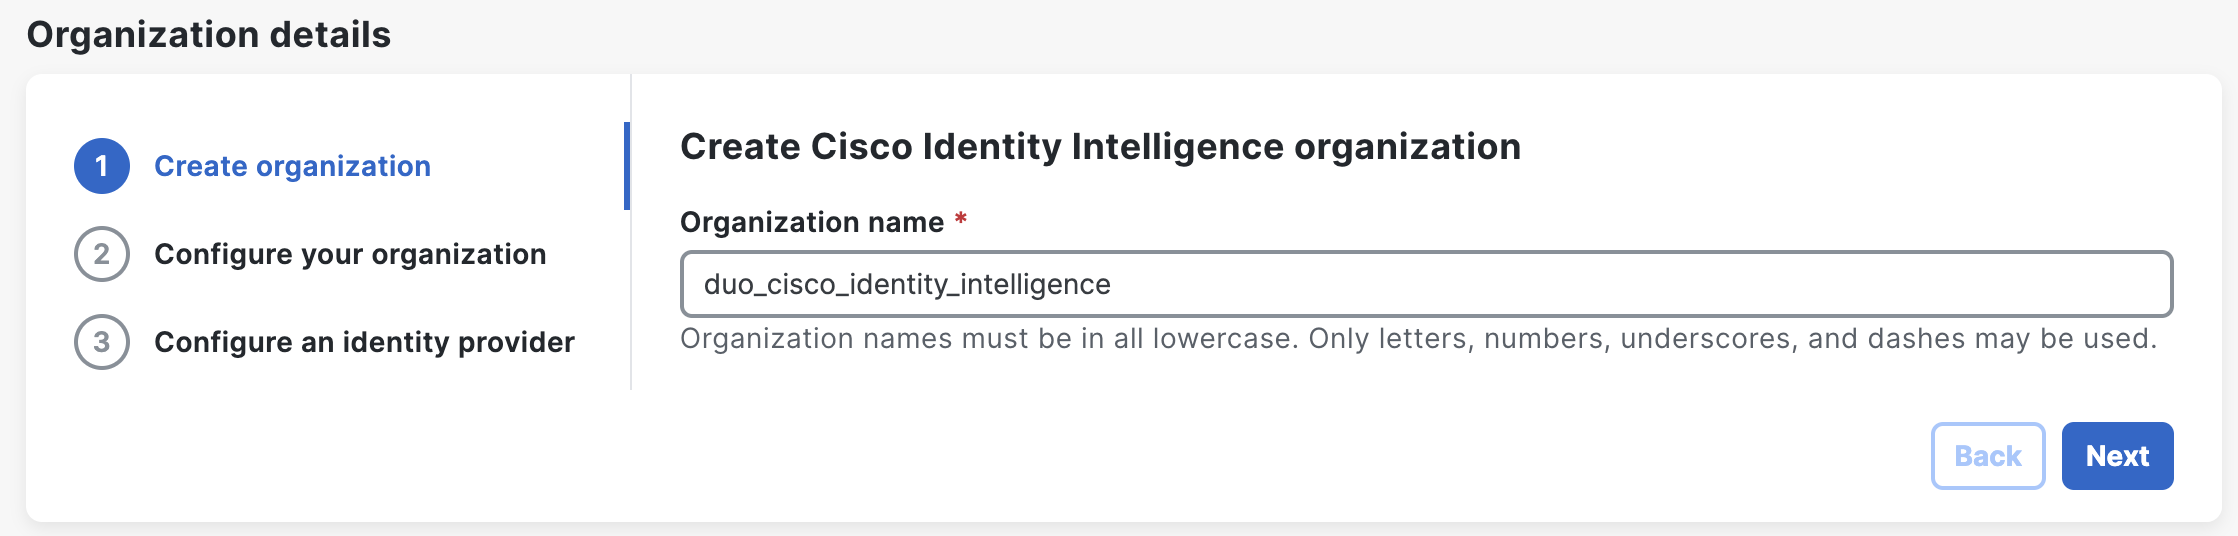 Organization Name for Cisco Identity Intelligence Tenant